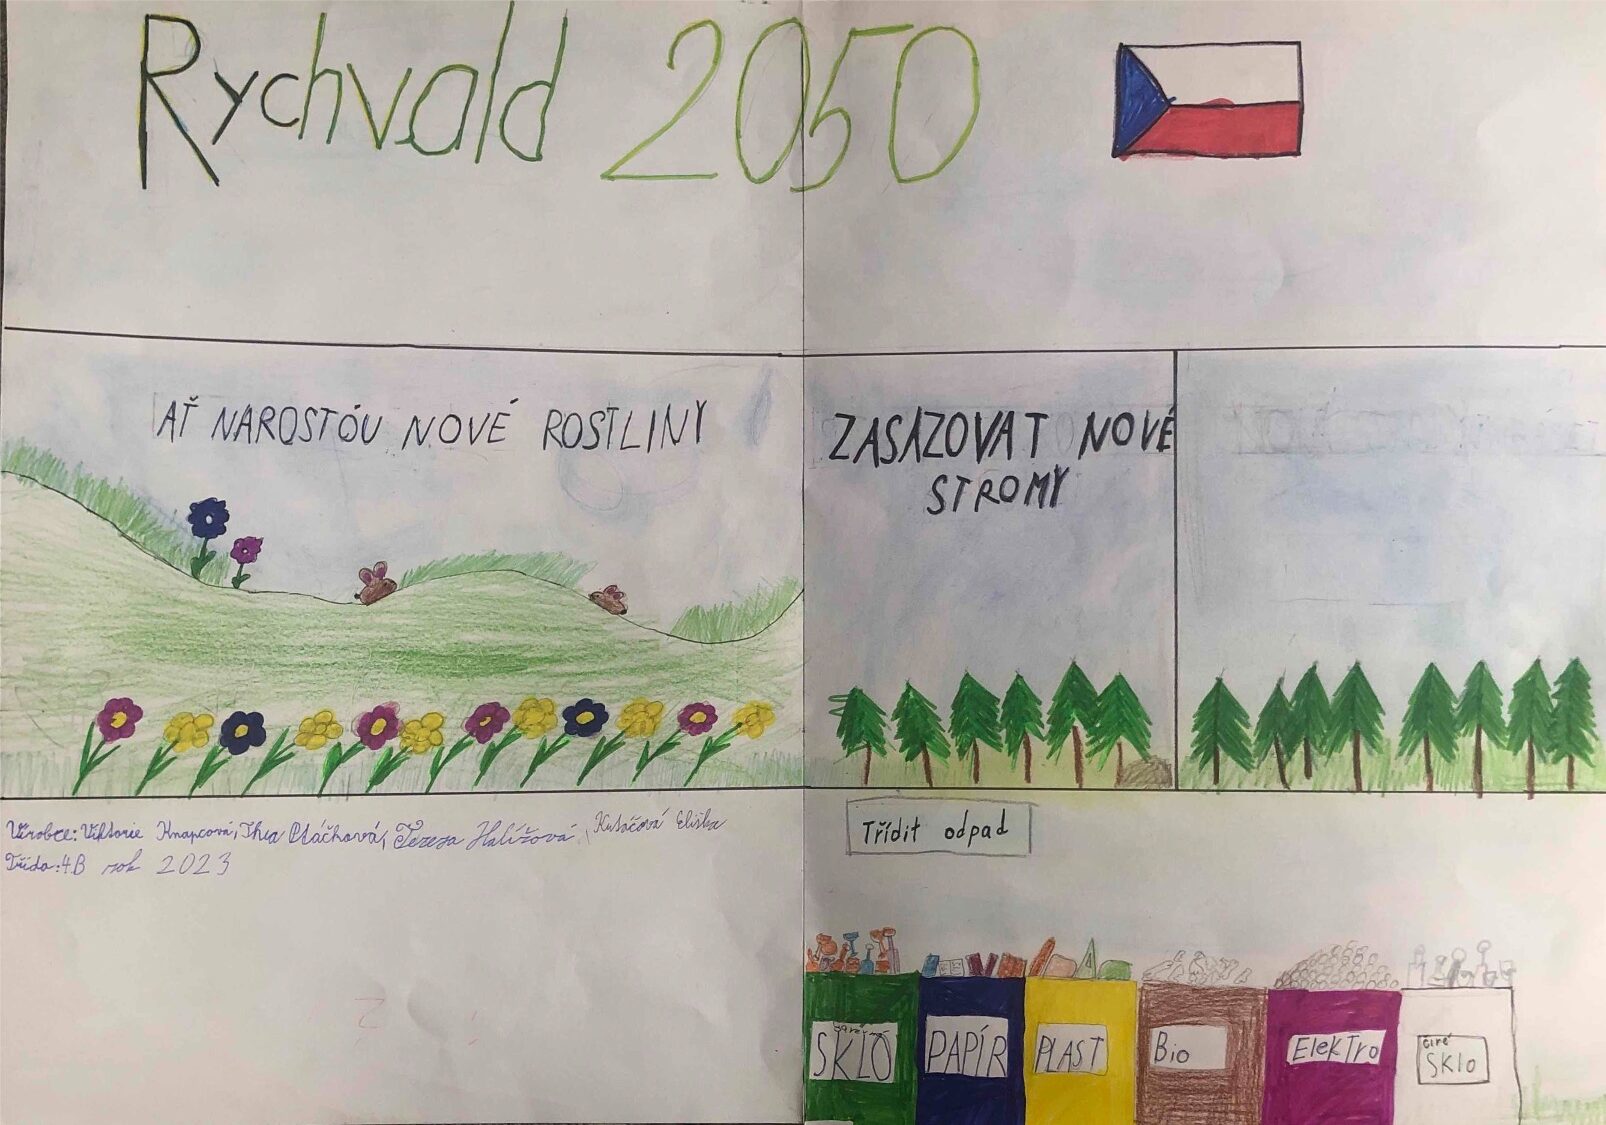 Rychvald 2050